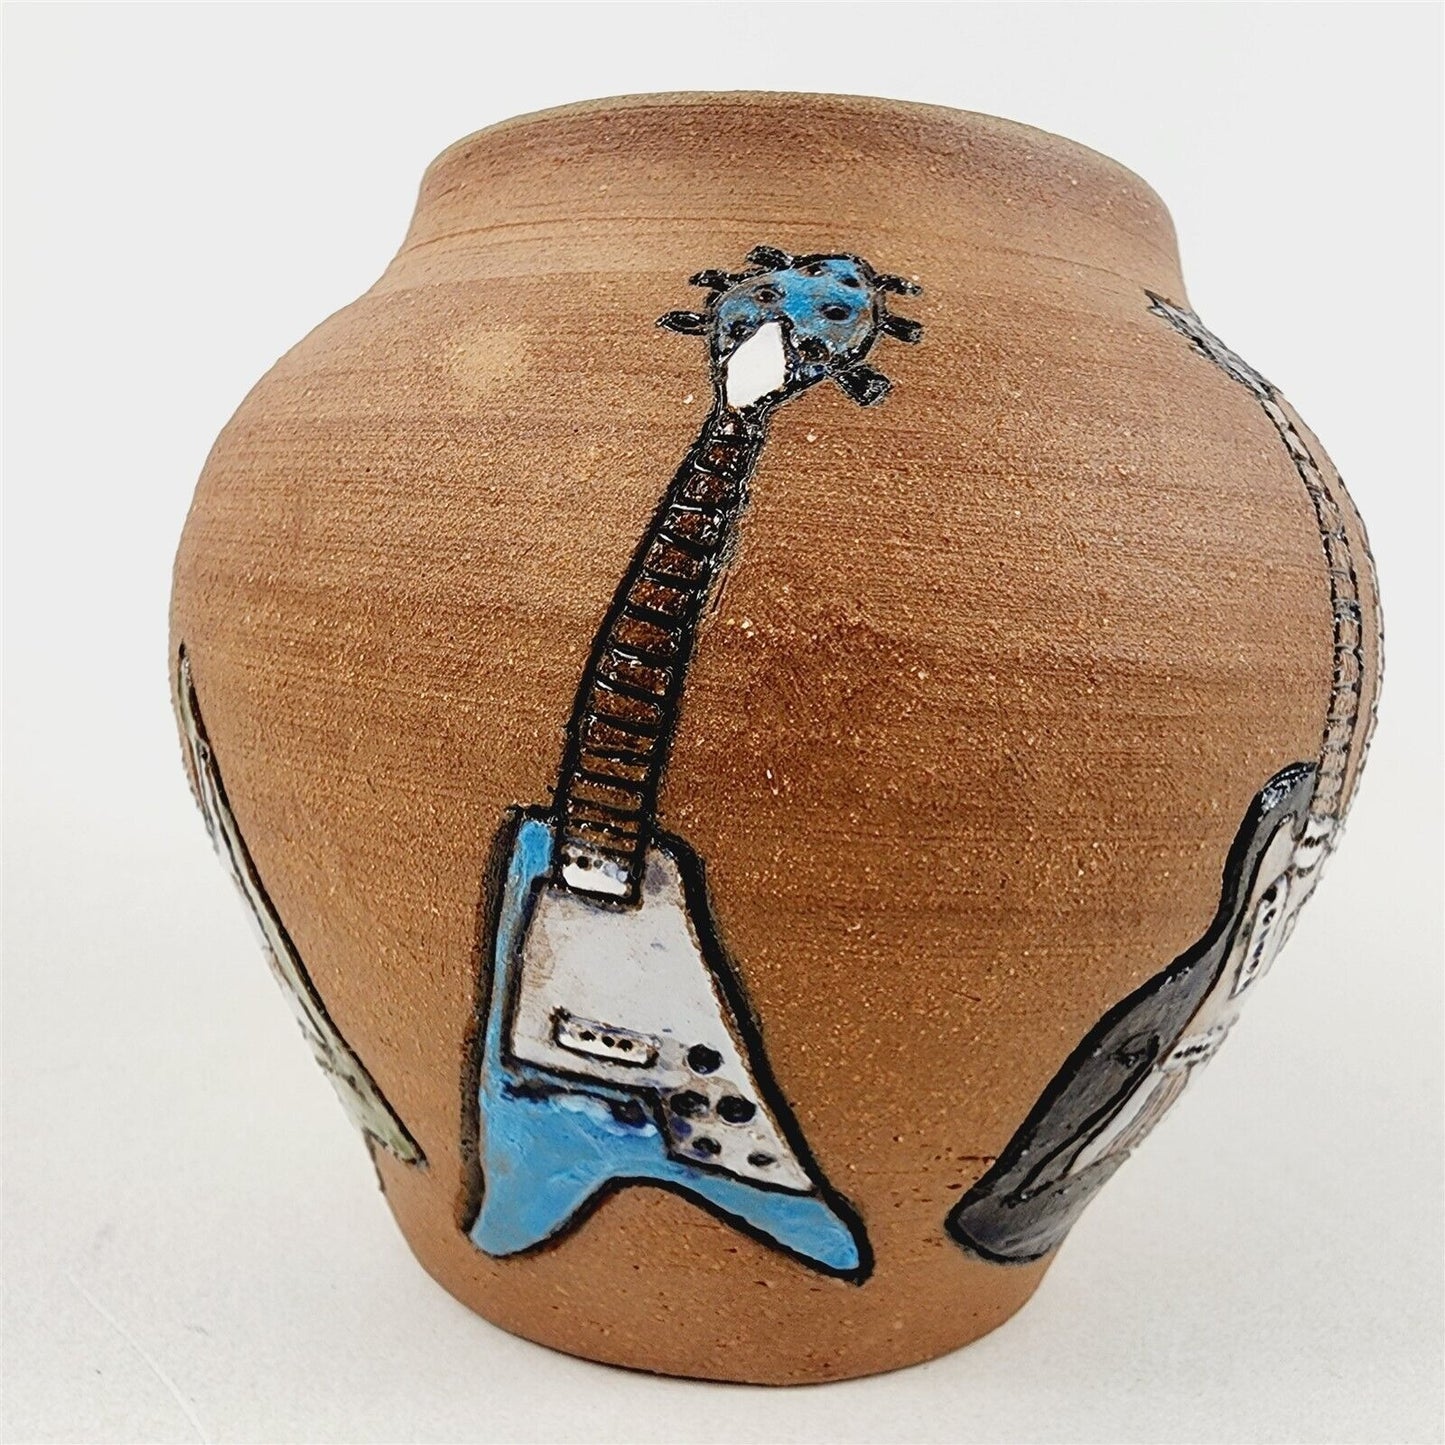 Glen LaFontaine Art Pottery Pot Vase Guitars Rock n Roll 5-21-99 - 5 1/2" tall